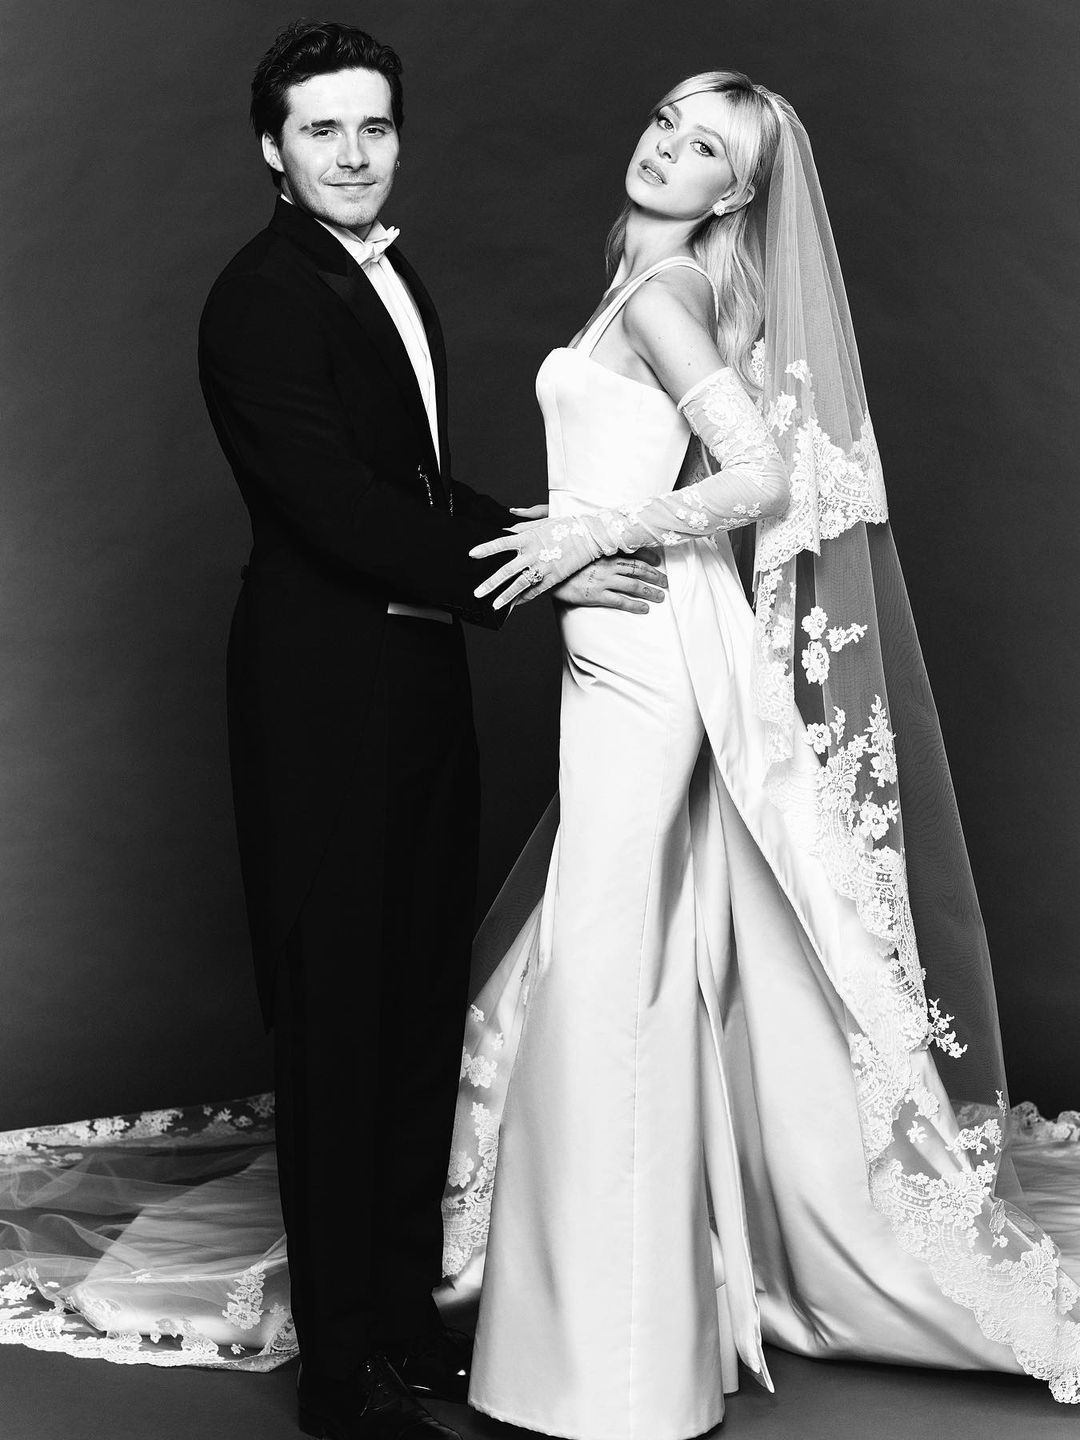 Nicola and Brooklyn Peltz-Beckhams wedding photo